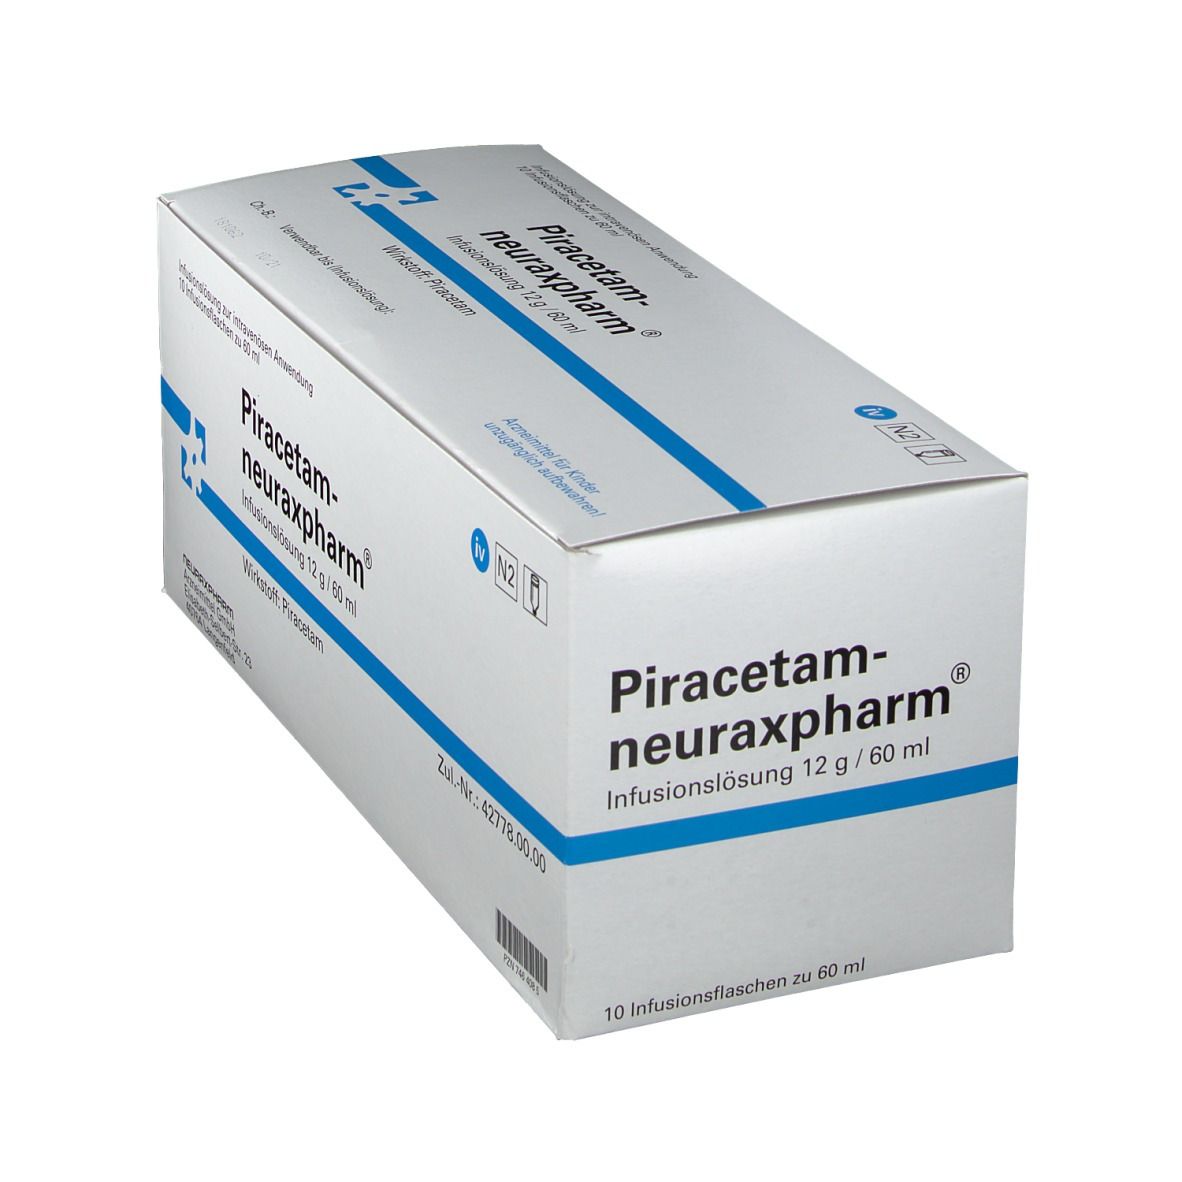 Piracetam-neuraxpharm® 12 g/60 ml